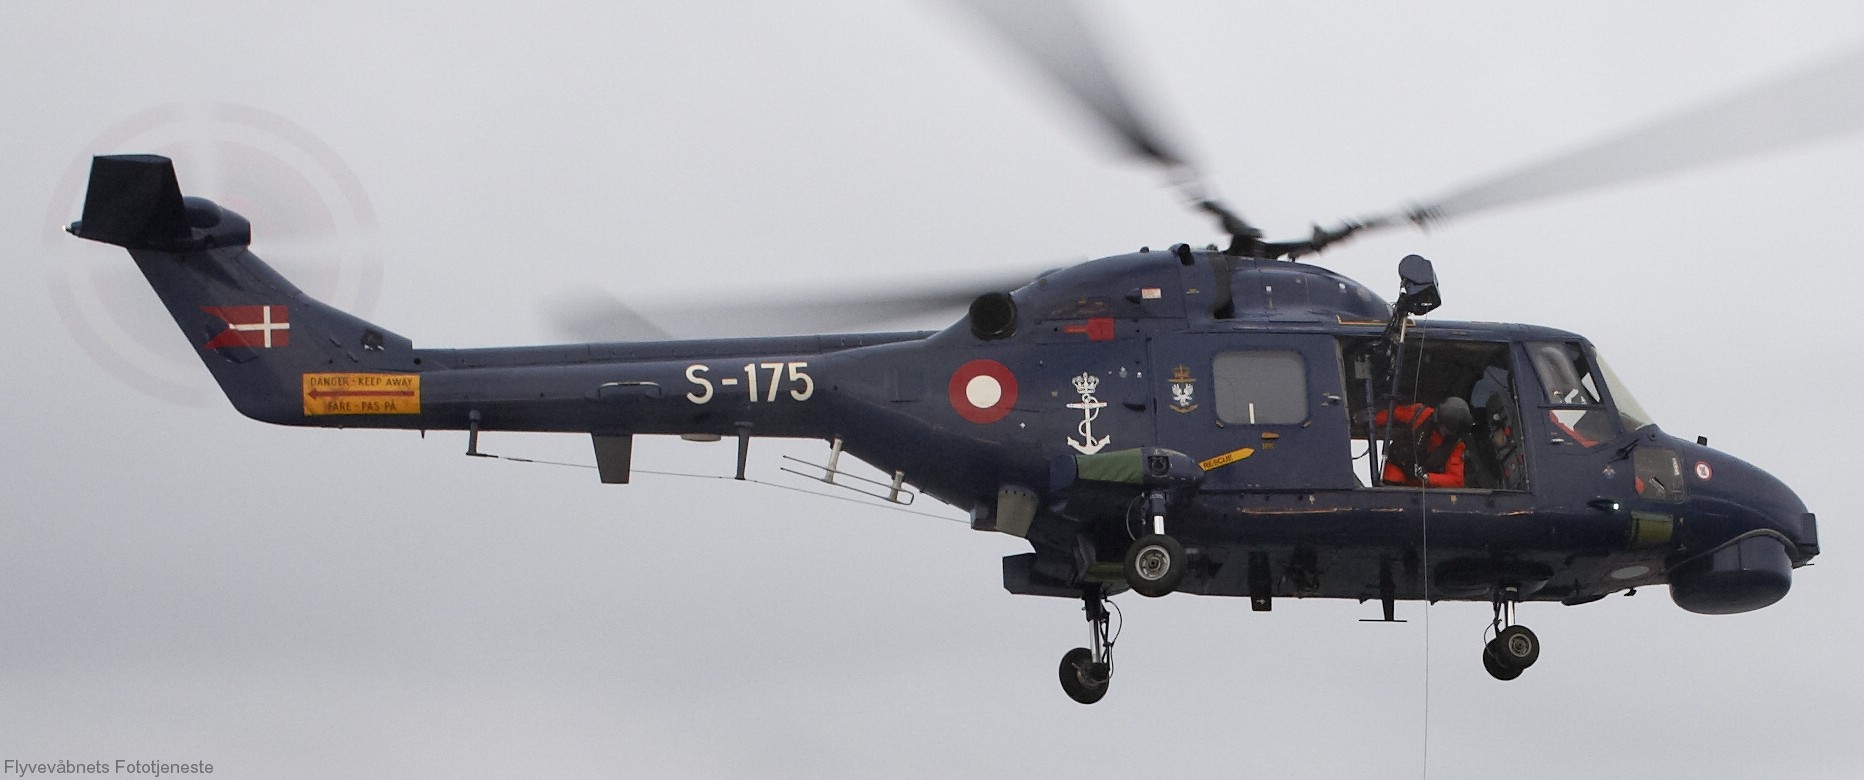 lynx mk.80 mk.90b helicopter westland royal danish navy air force kongelige danske marine flyvevabnet s-175 10